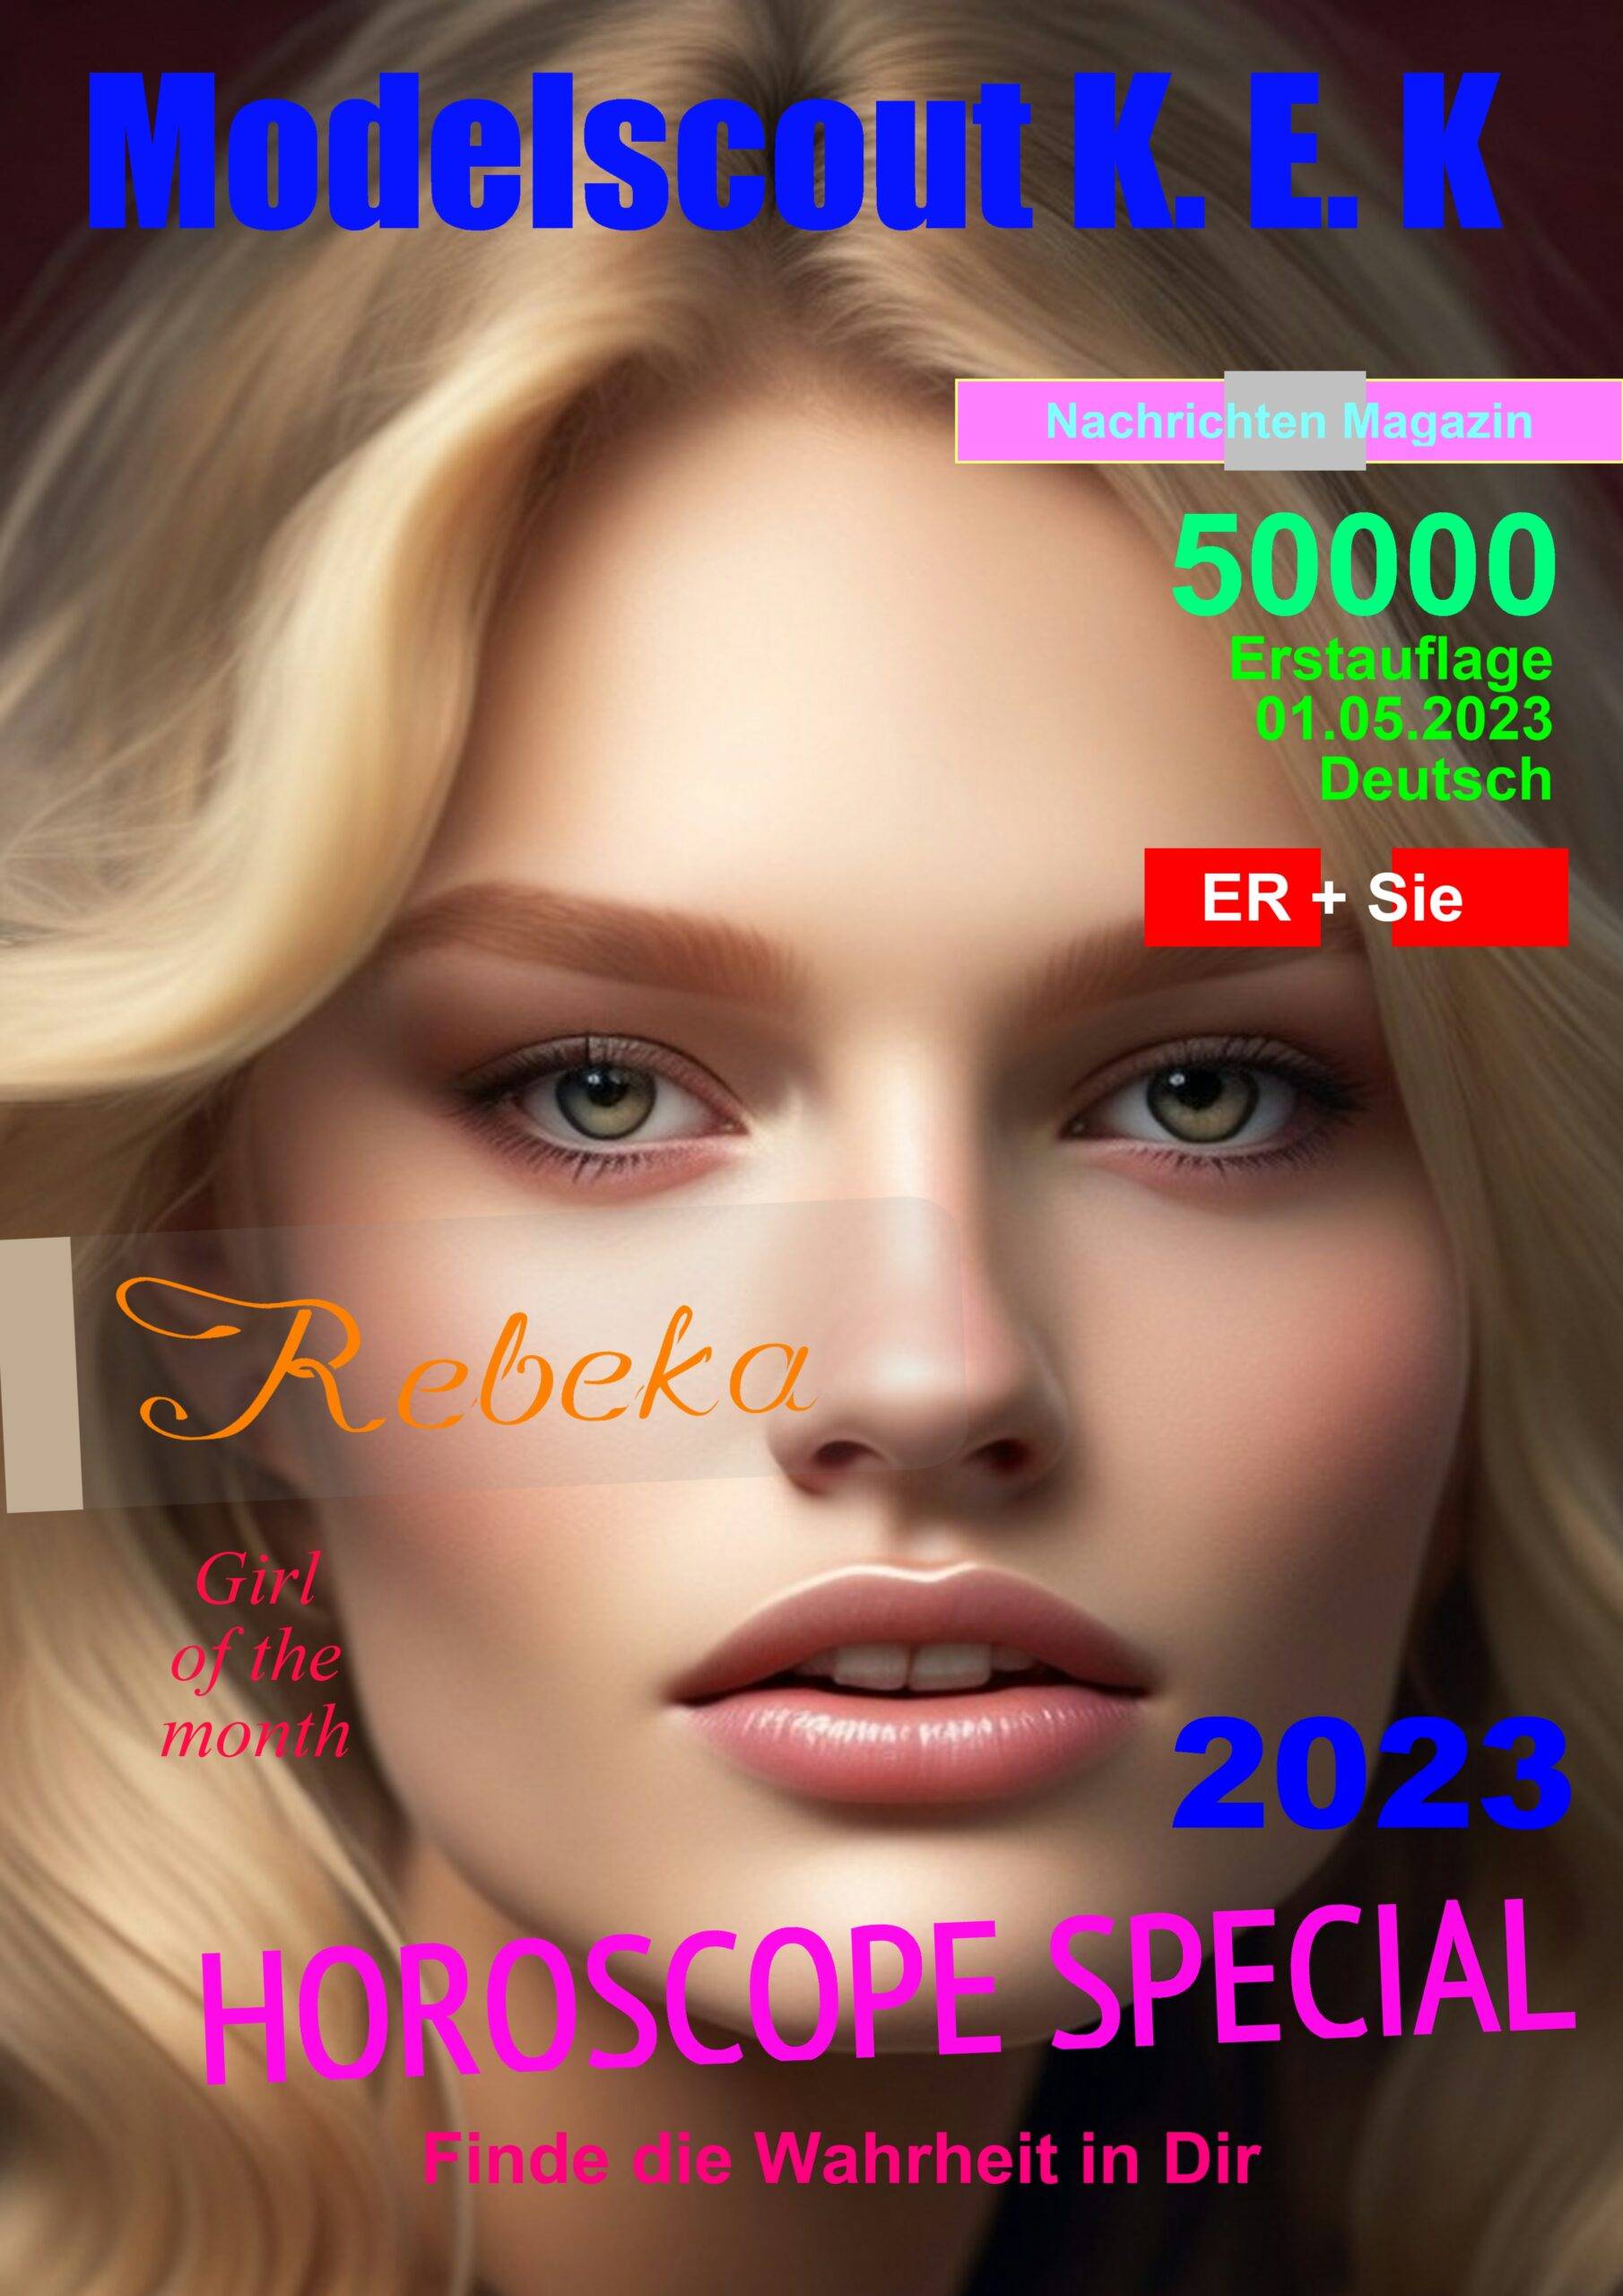 Magazine Cover 1 scaled 2023